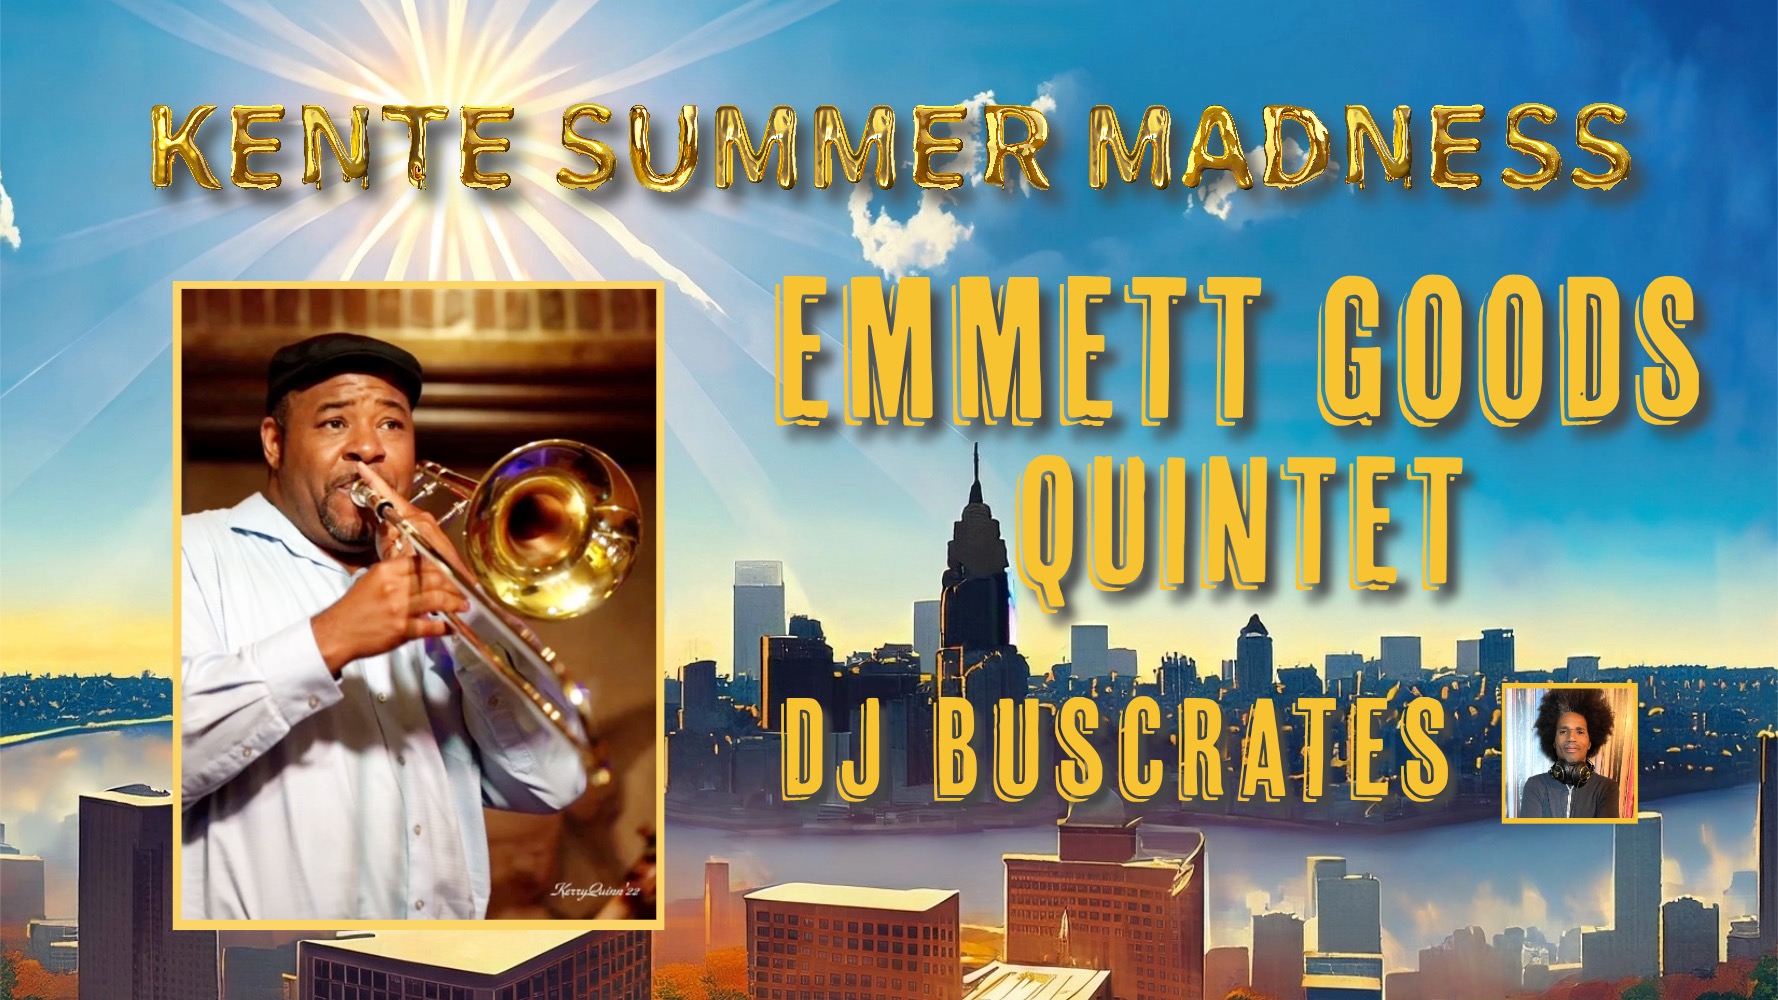 Thursday Night Jazz: Kente Summer Madness with The Emmett Goods Quintet & DJ Buscrates